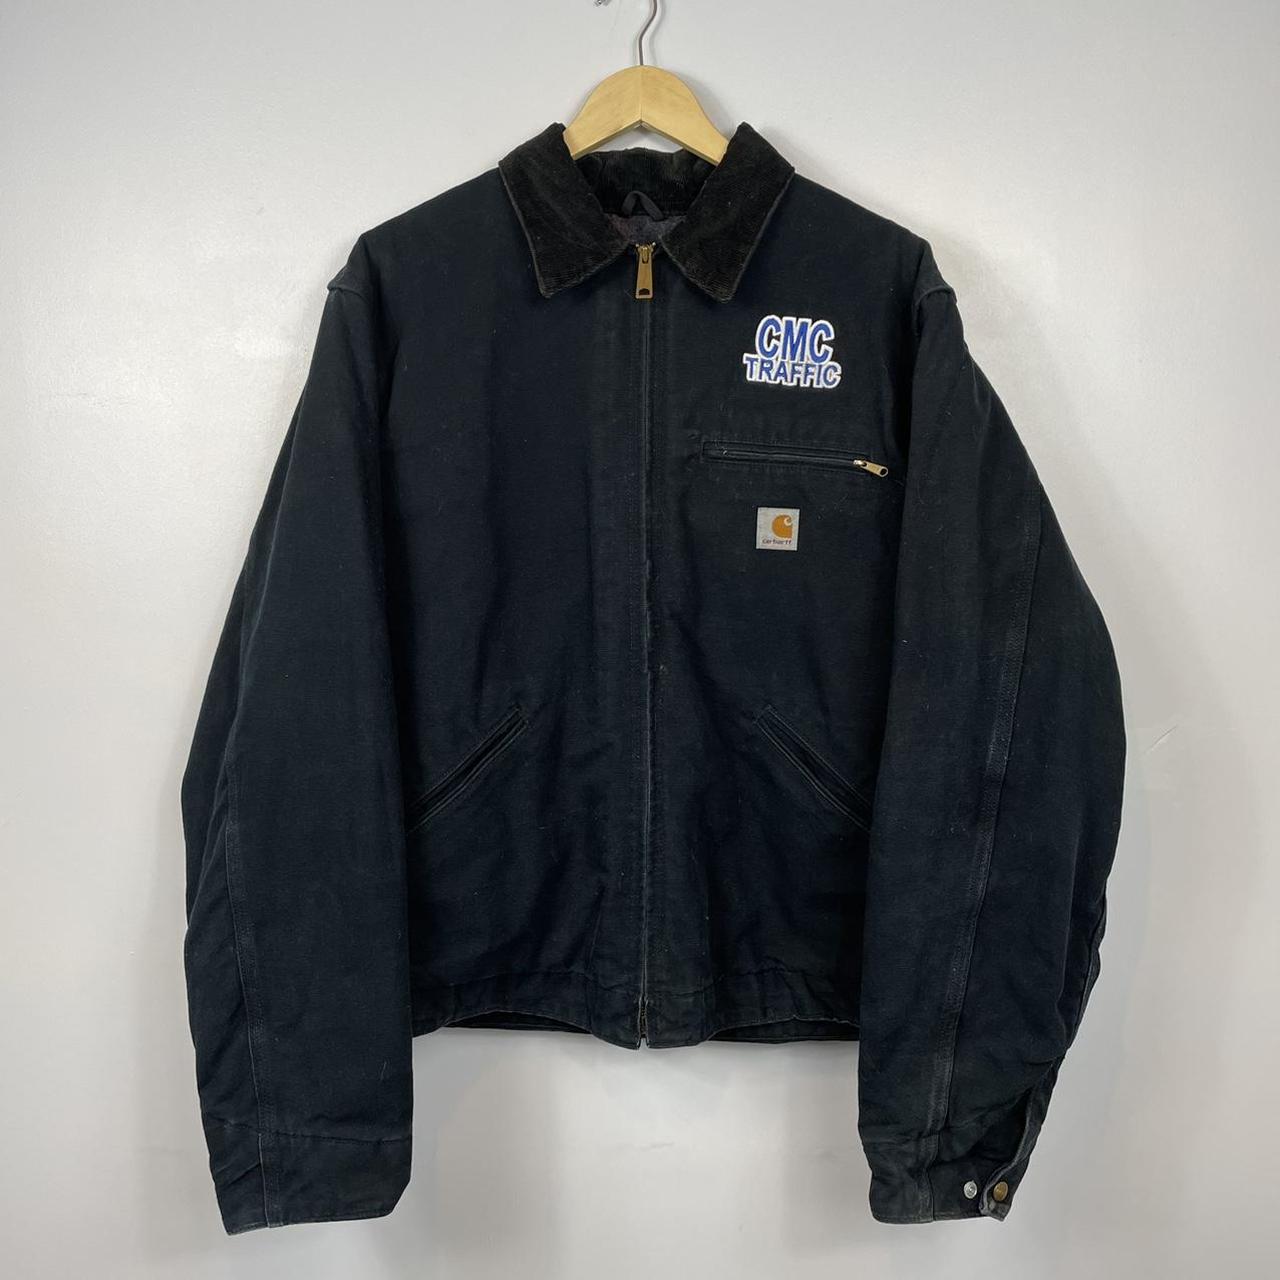 Vintage Carhartt Jacket, Black, Embroidery, Made in... - Depop